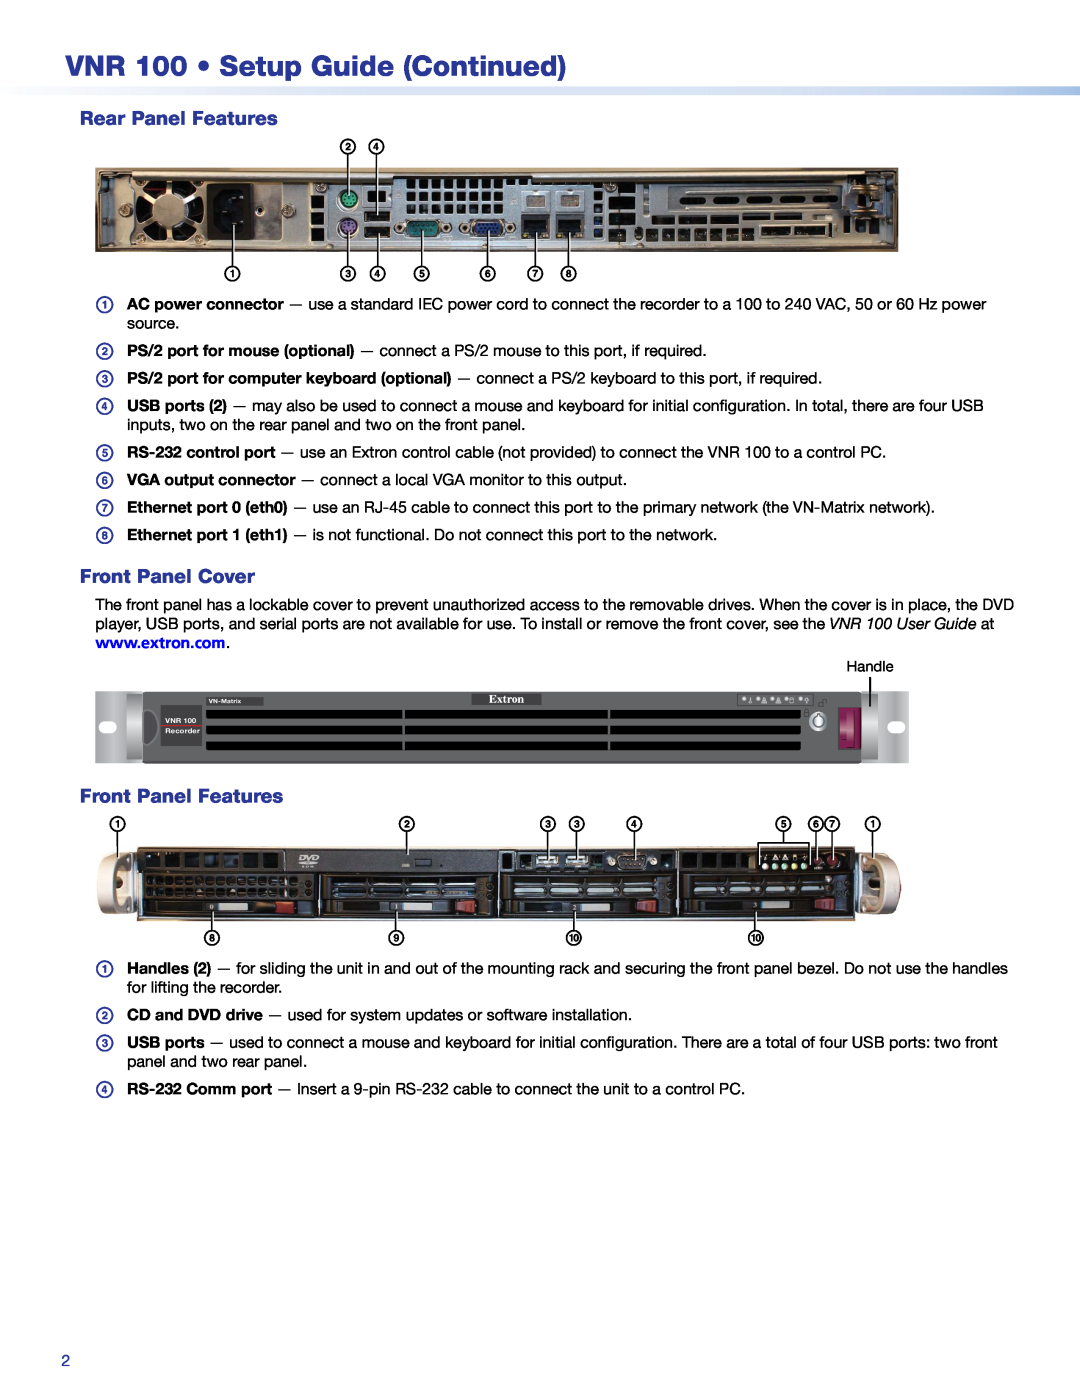 Extron electronic setup guide VNR 100 Setup Guide Continued 